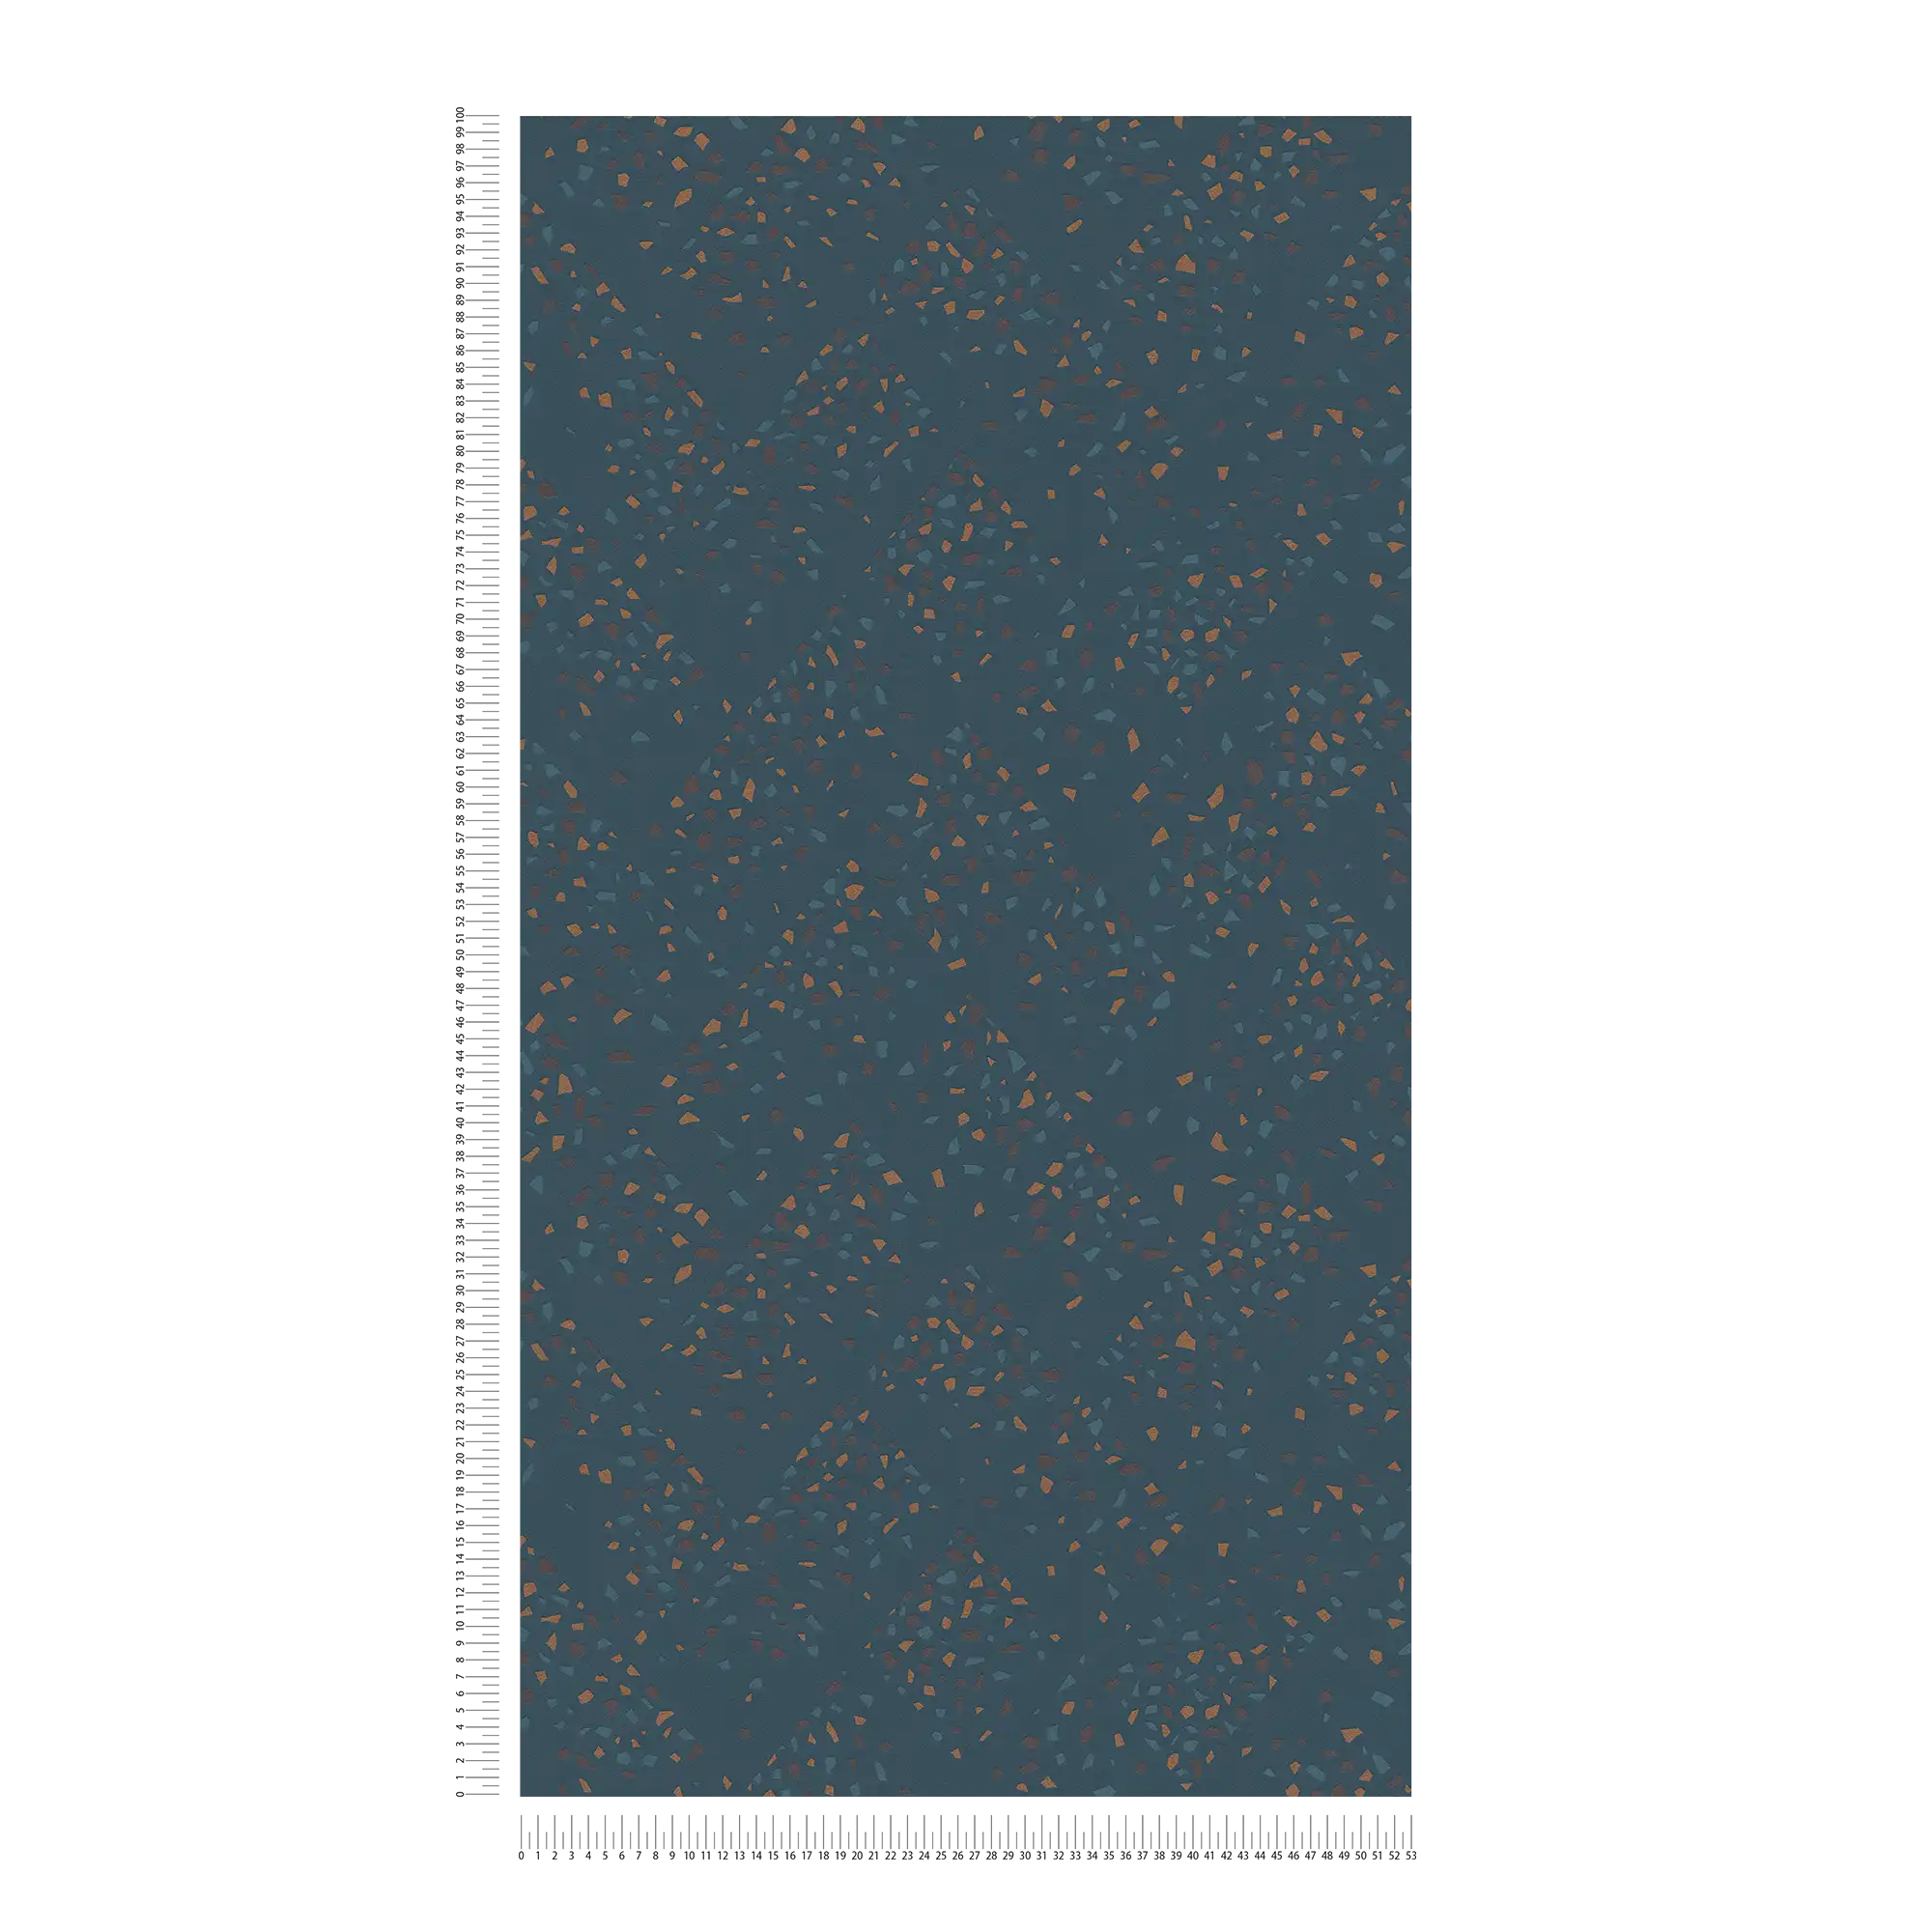             Papier peint intissé avec motif terrazzo - bleu, vert, marron
        